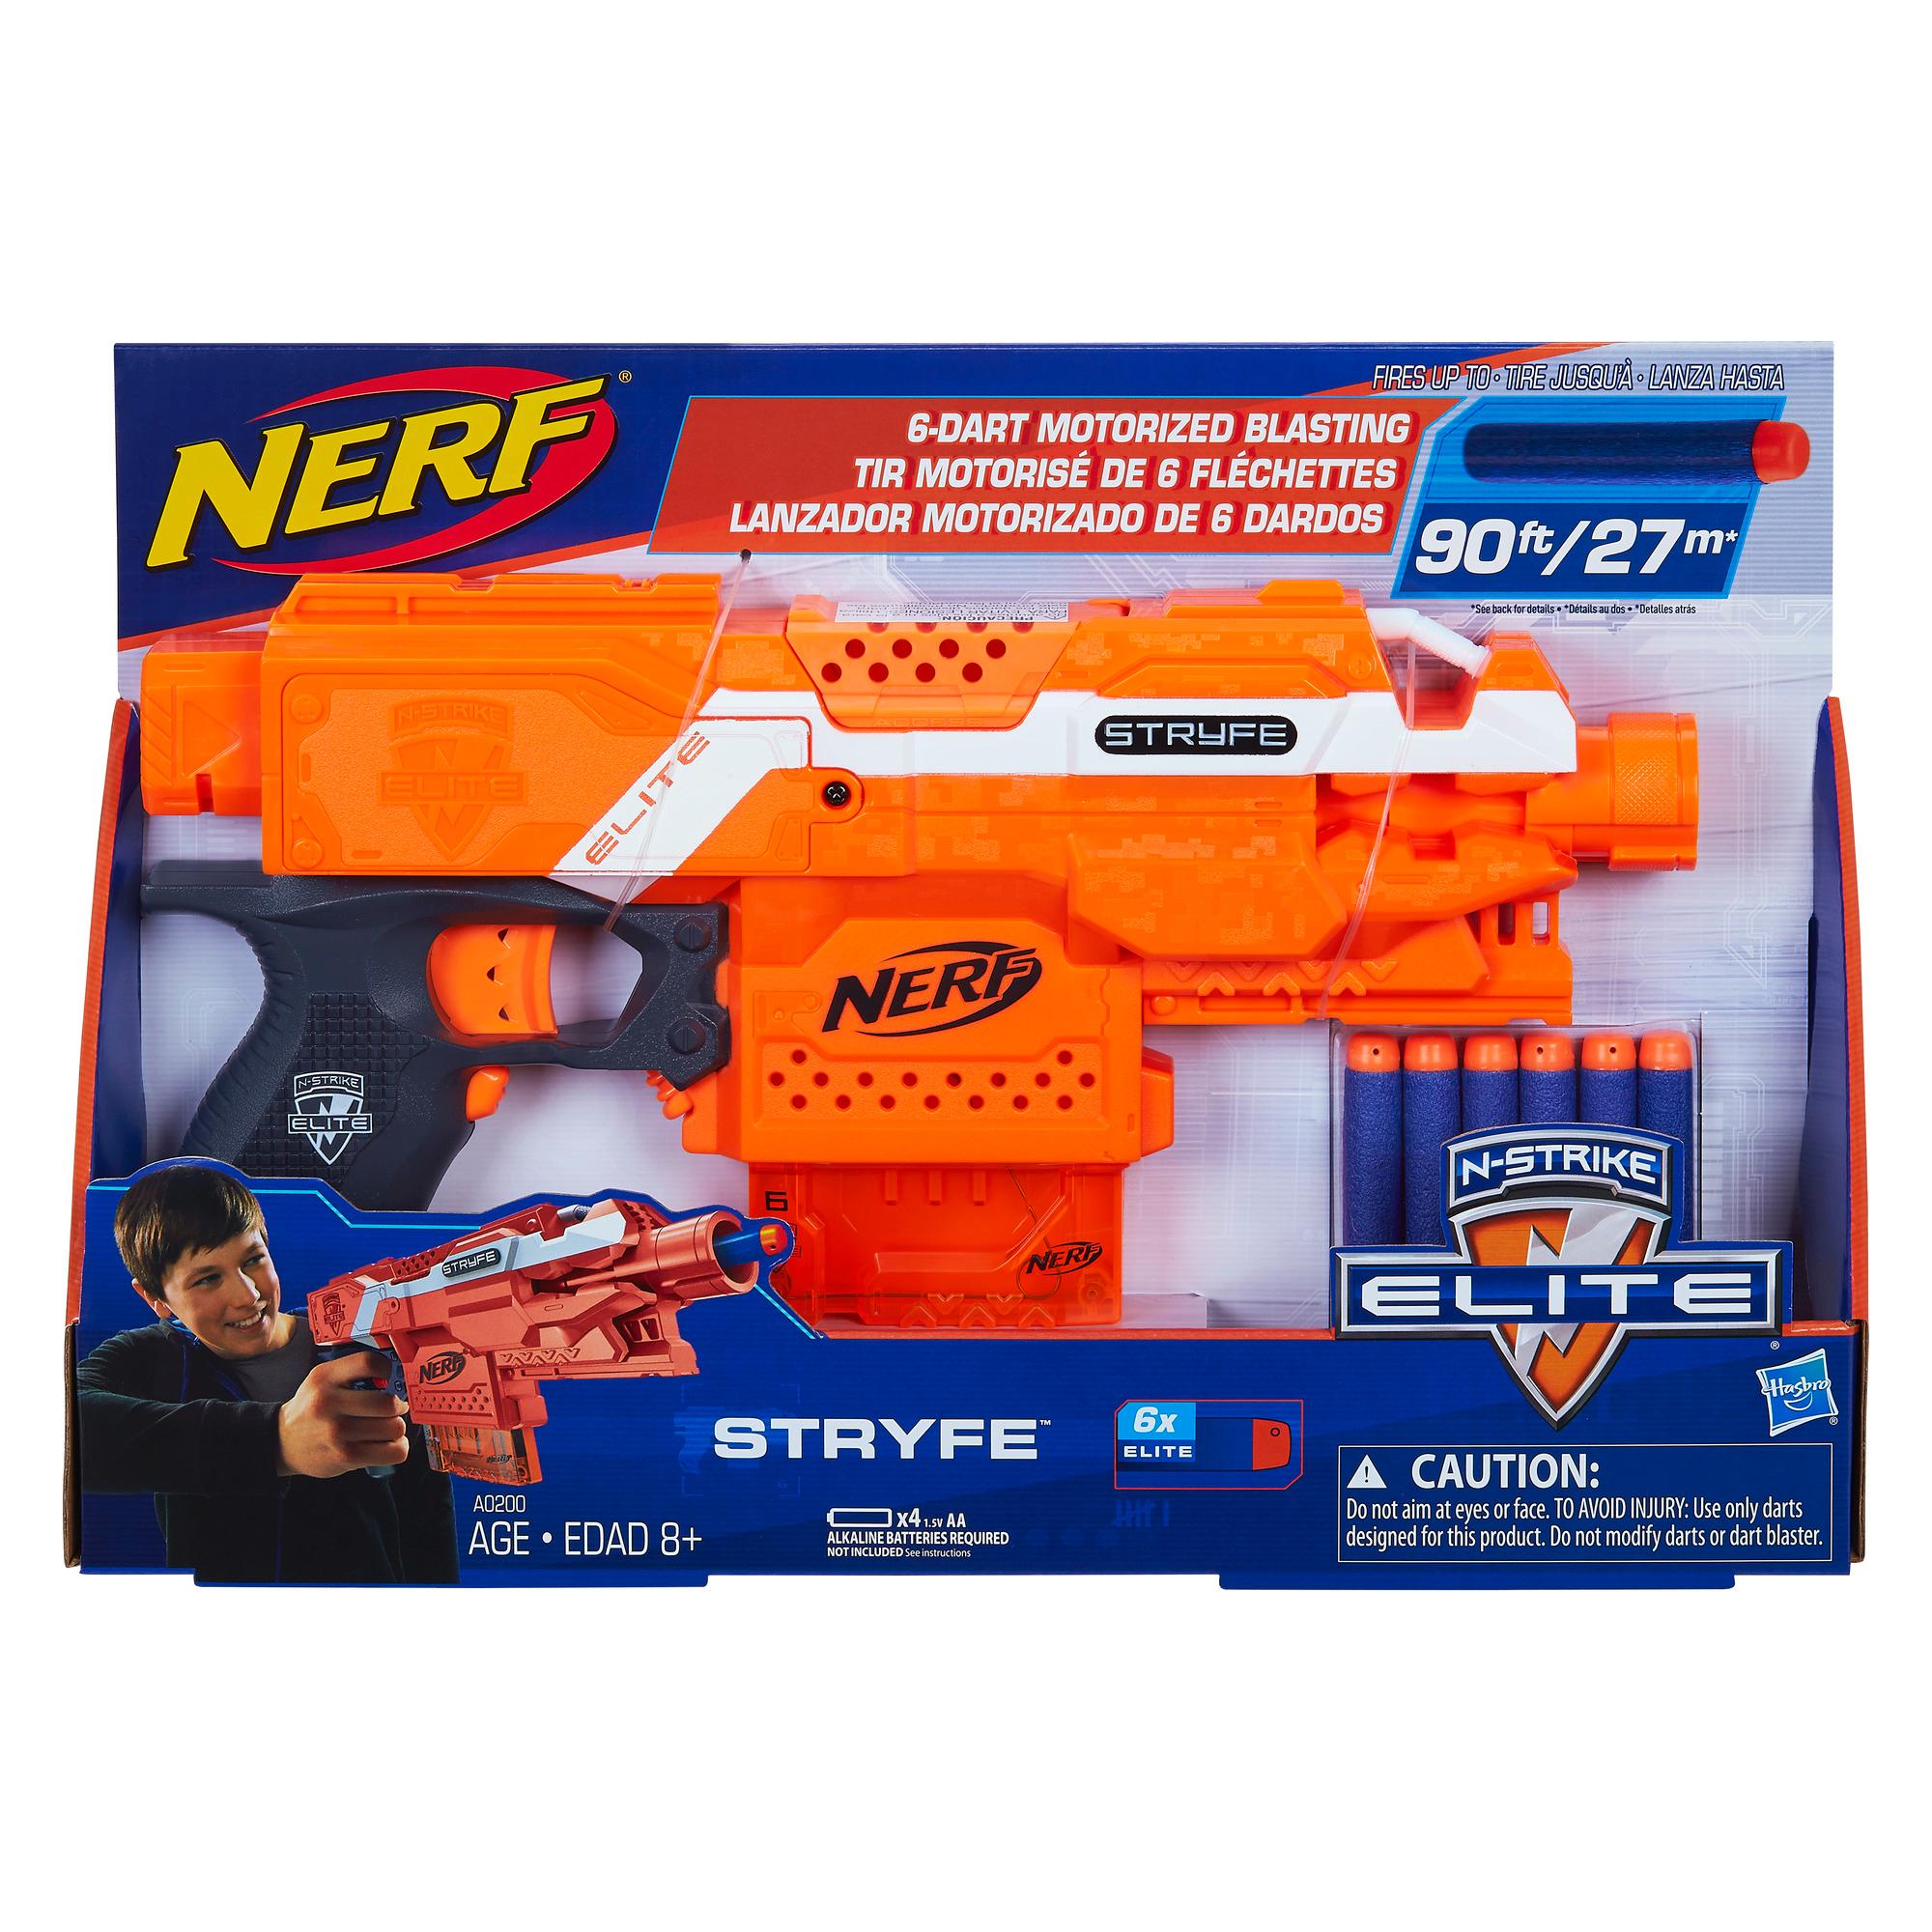 A0200E240 Nerf Hasbro N-Strike Elite Import Royaume-Uni Stryfe 